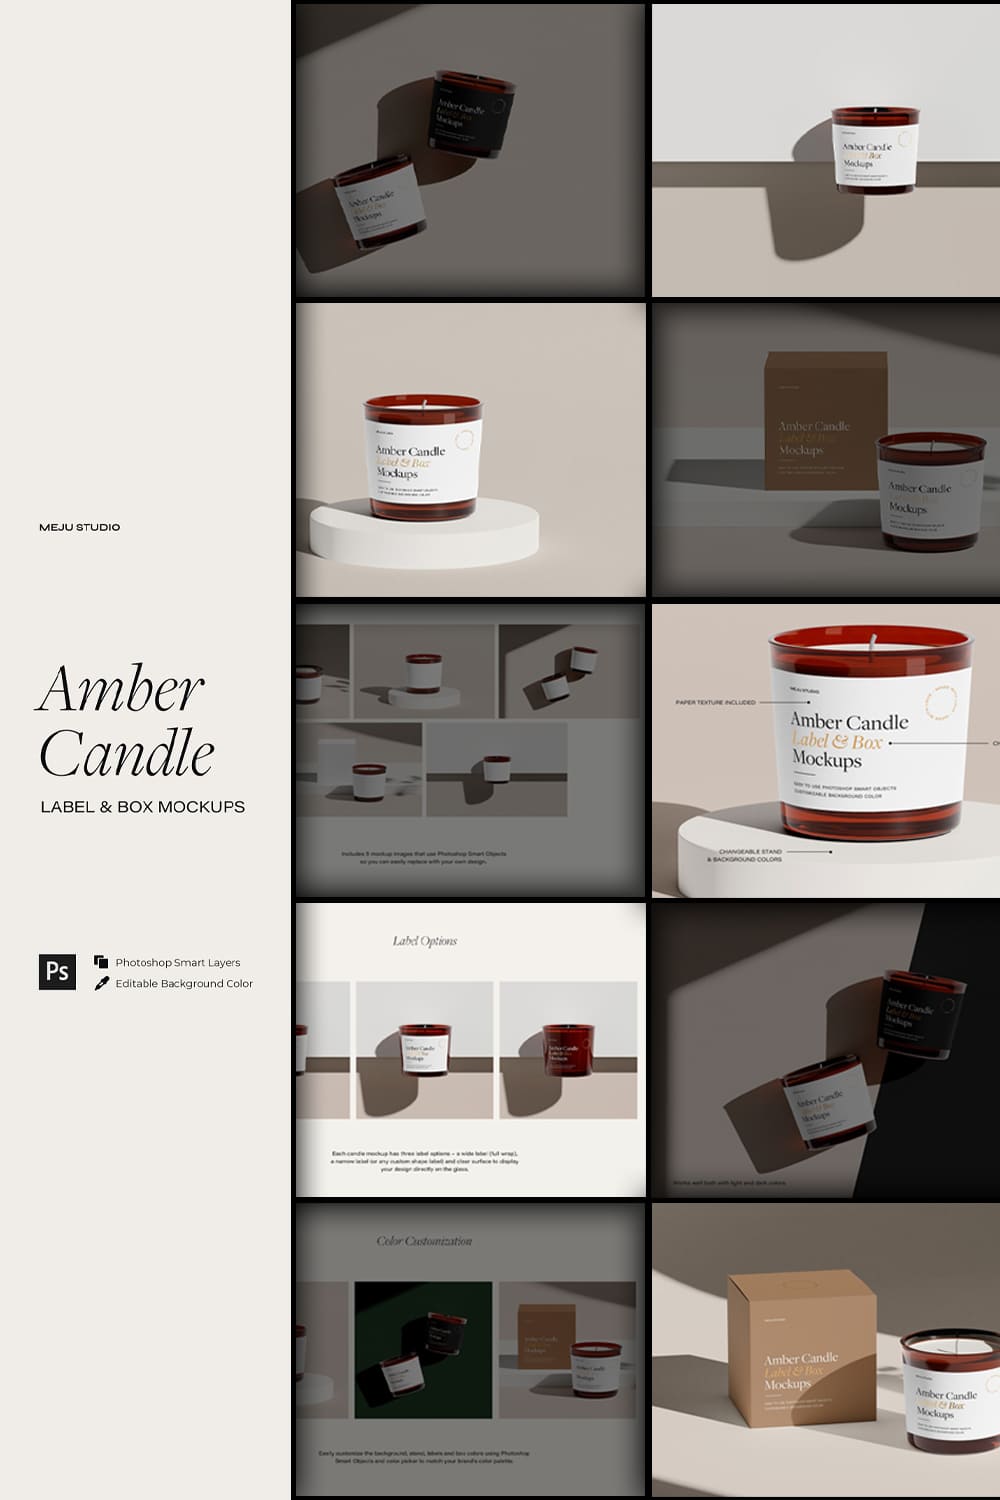 Amber Glass Candle & Box Mockup Set - Pinterest.